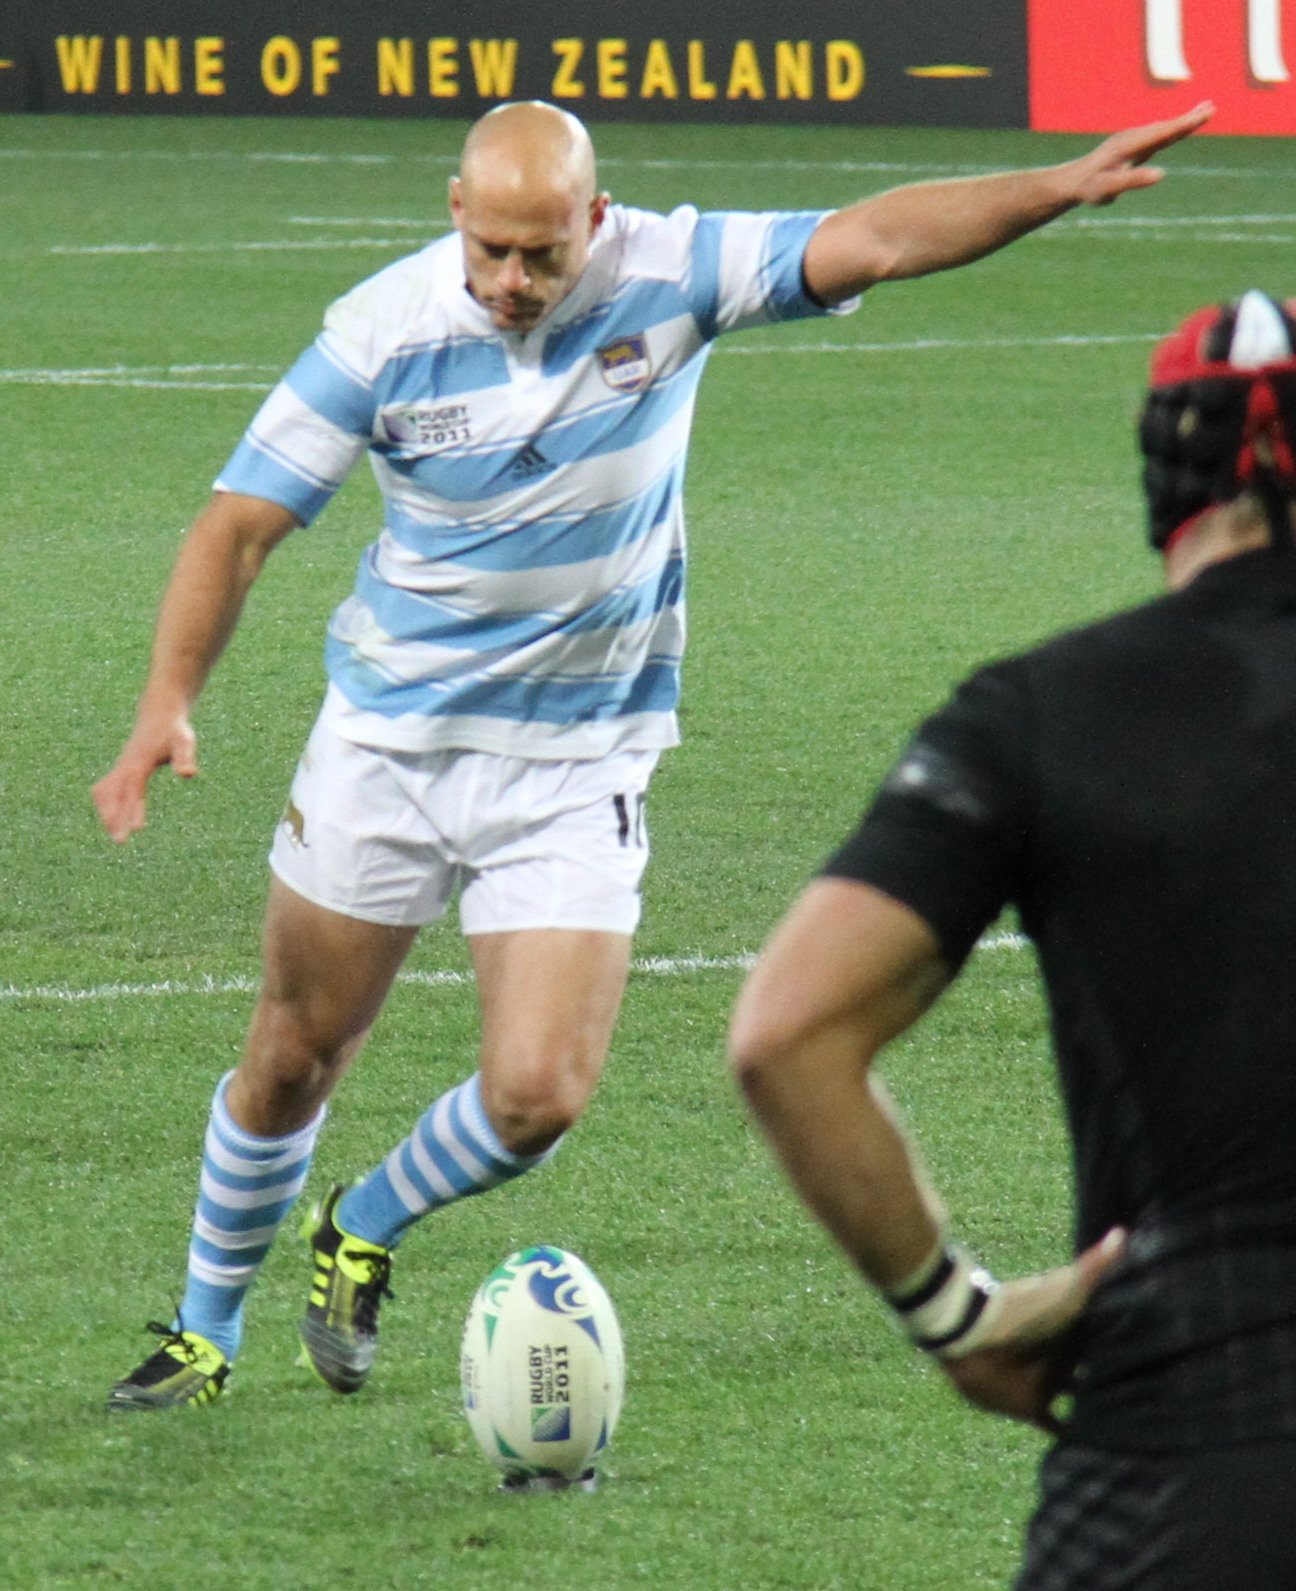 Felipe Contepomi kicking a football on the field